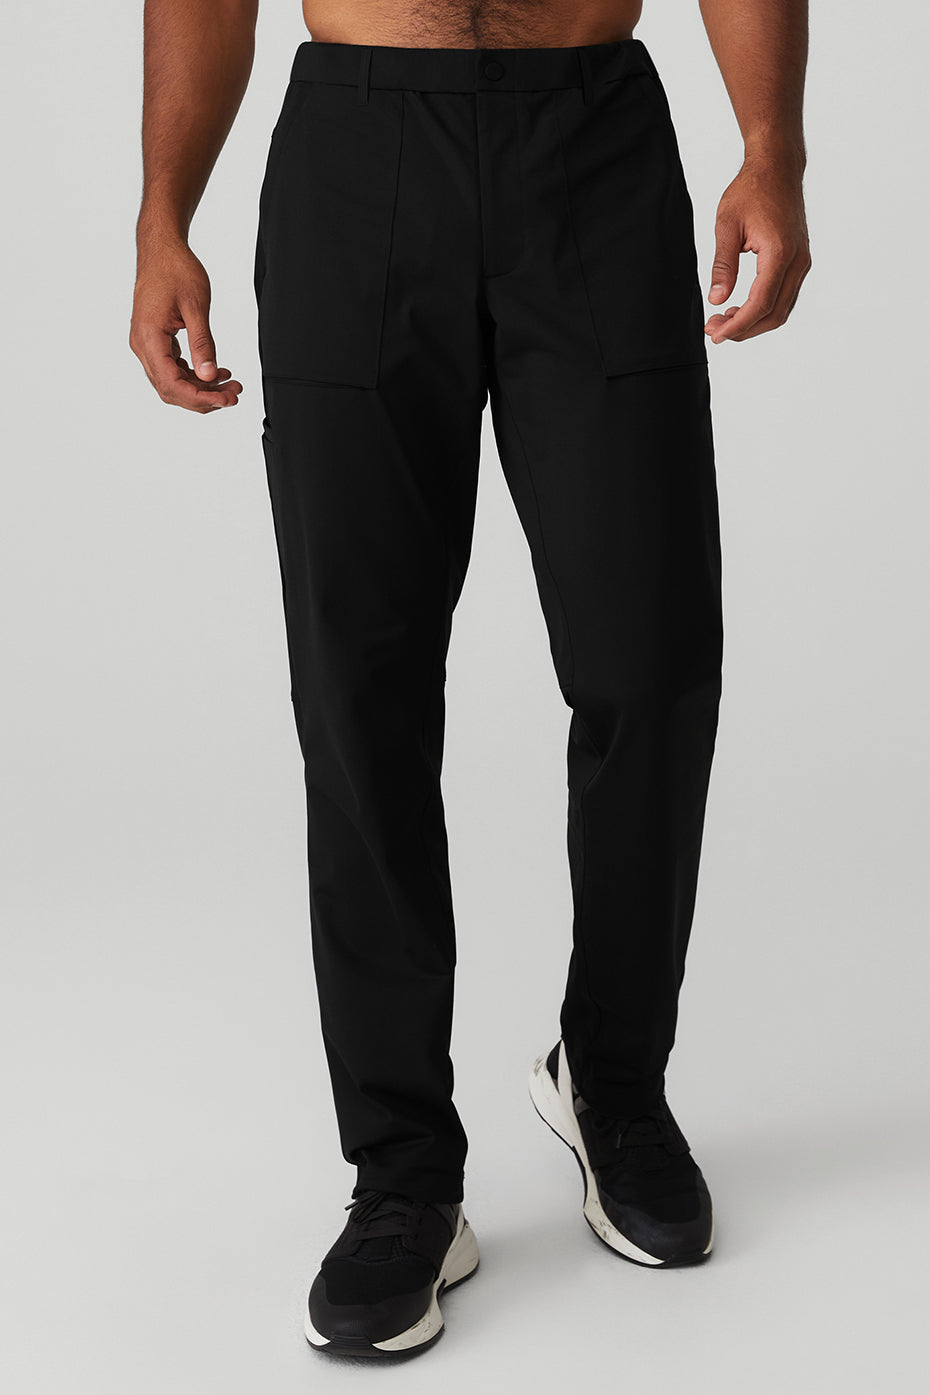 ALO Unwind Cargo Pants Black XS : Buy Online at Best Price in KSA - Souq is  now : Fashion